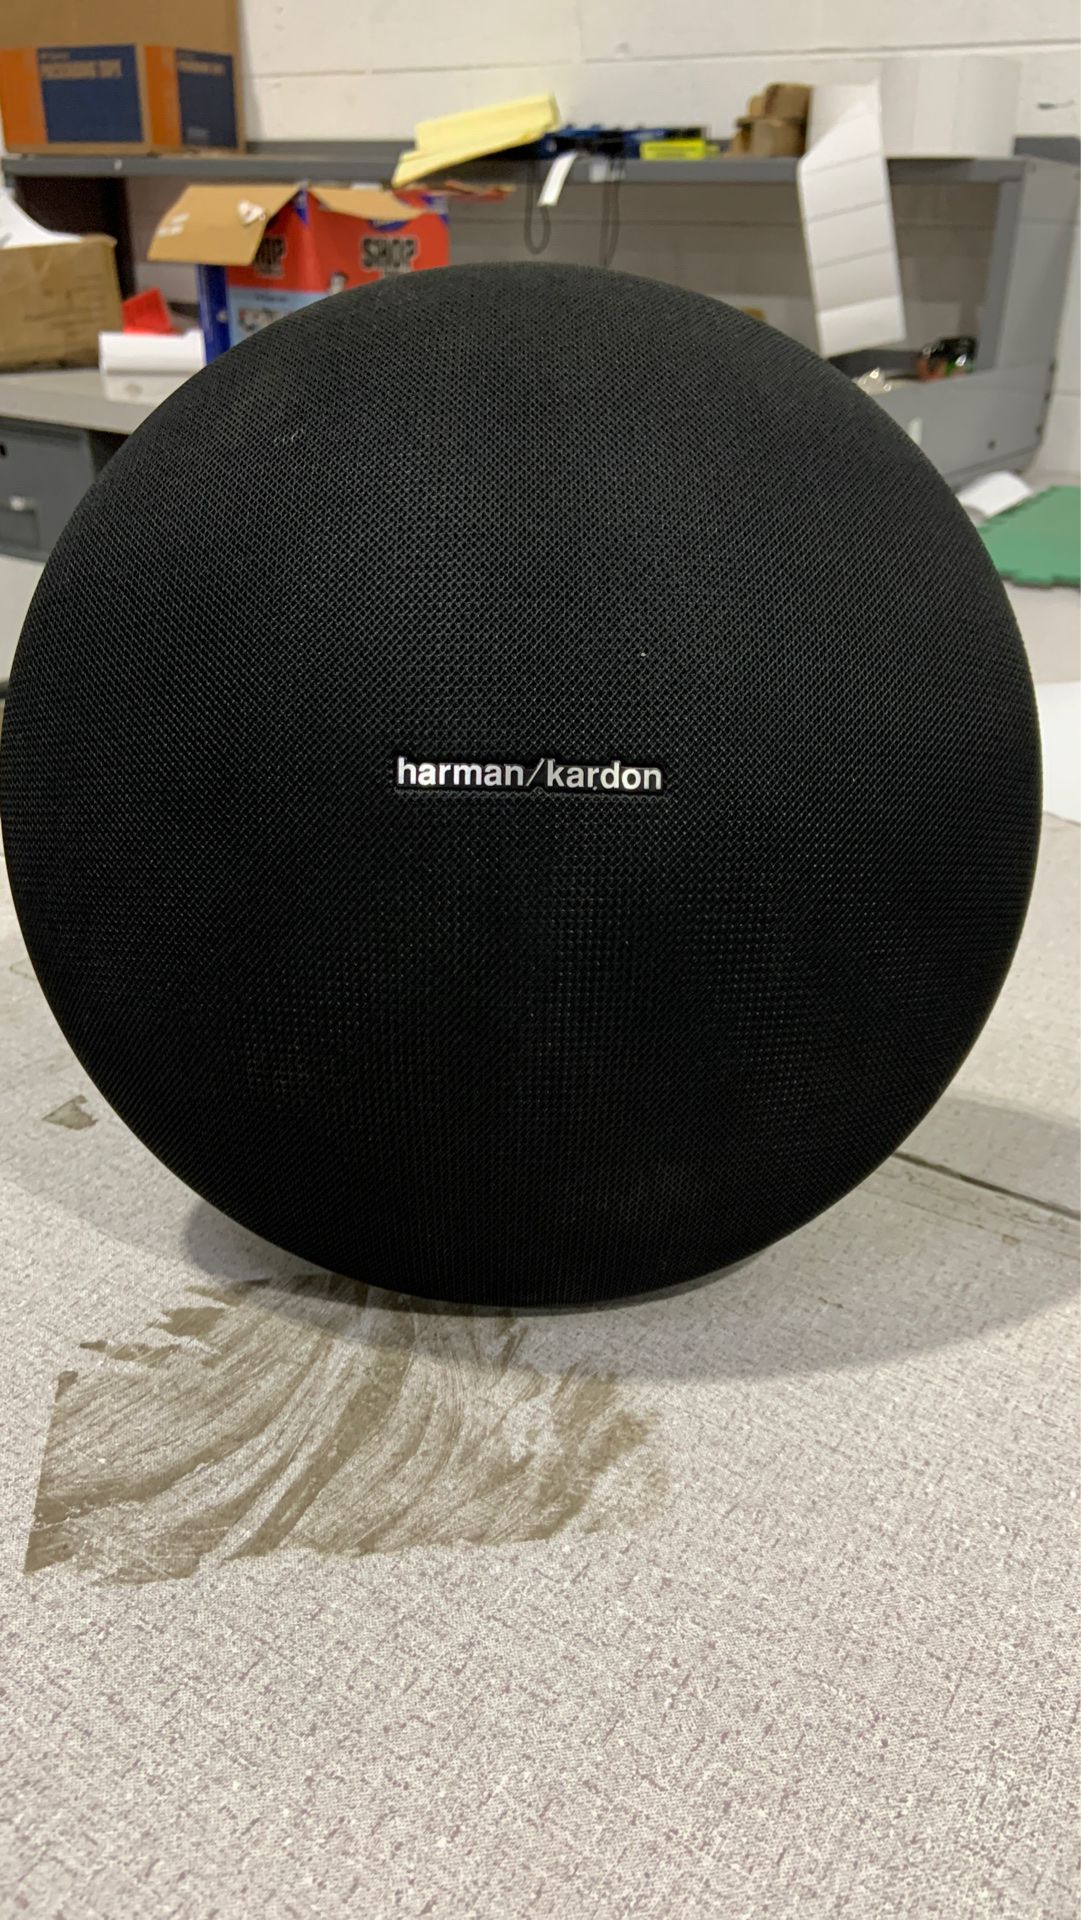 Harman/ kardan bluetooth speaker